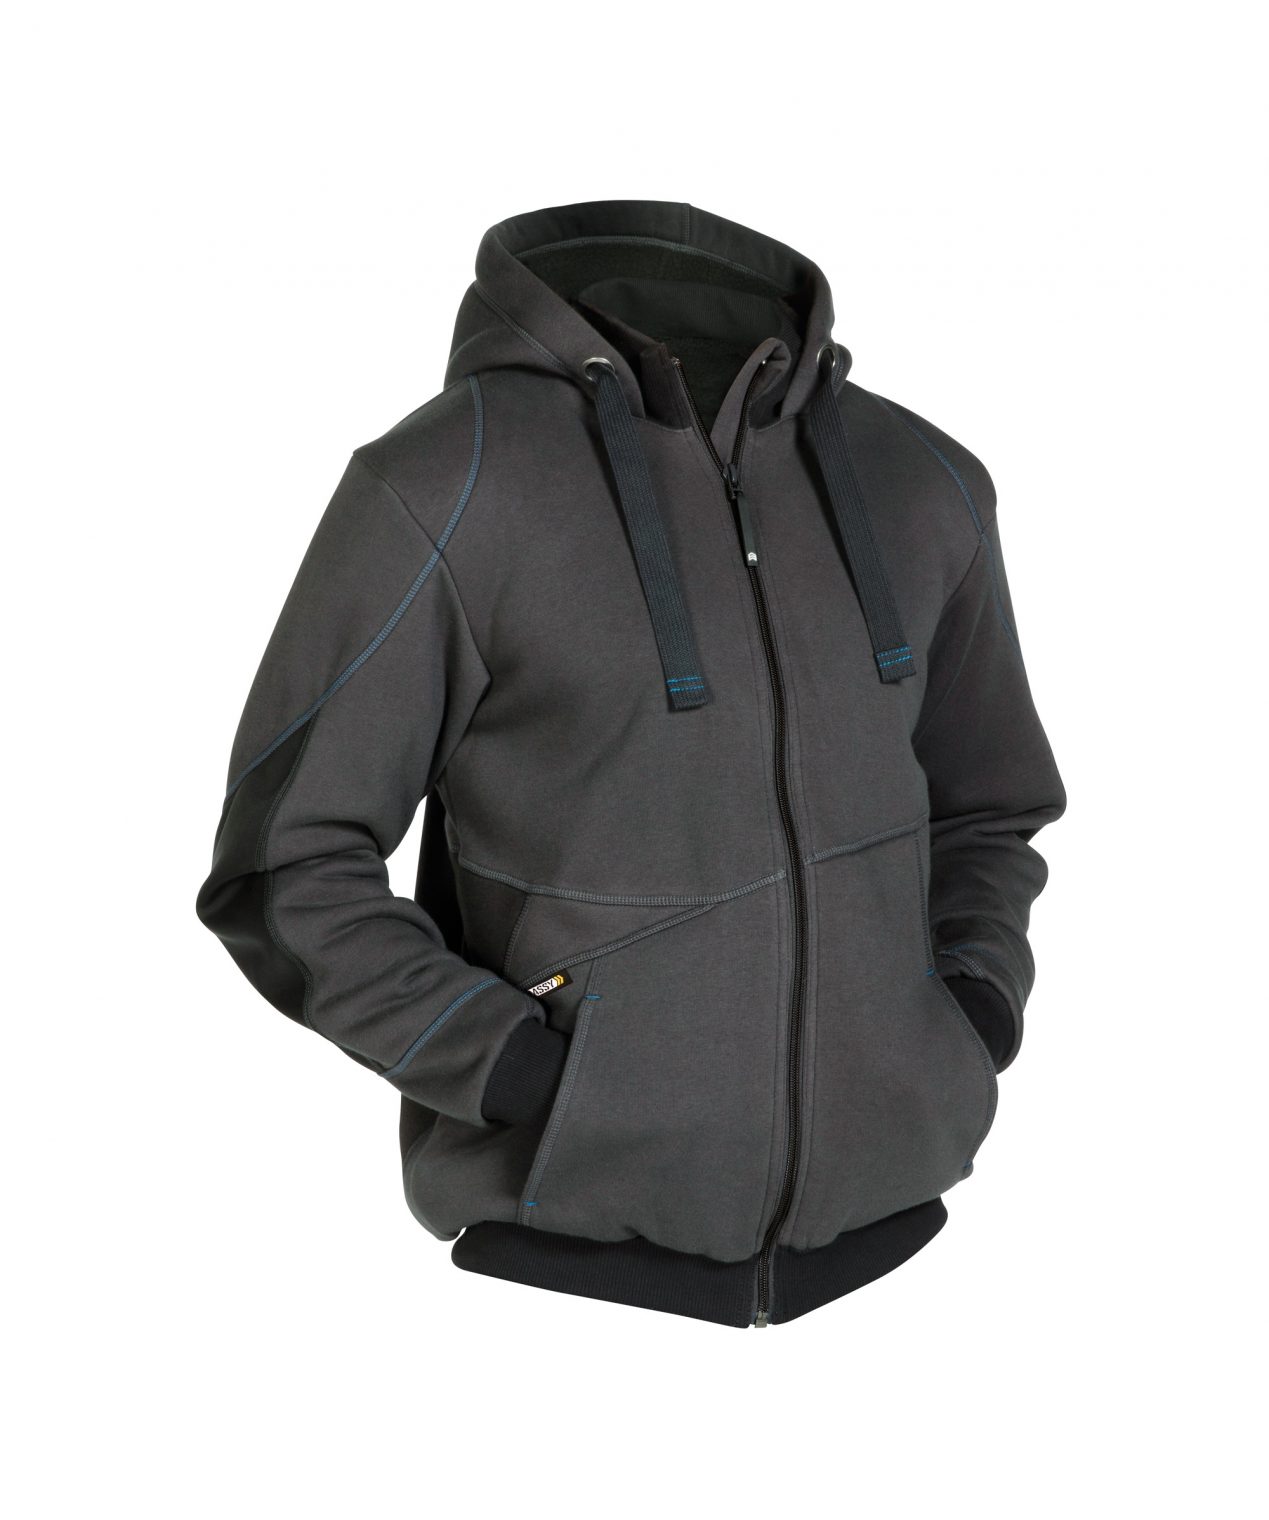 pulse sweatshirt jacket anthracite grey black detail